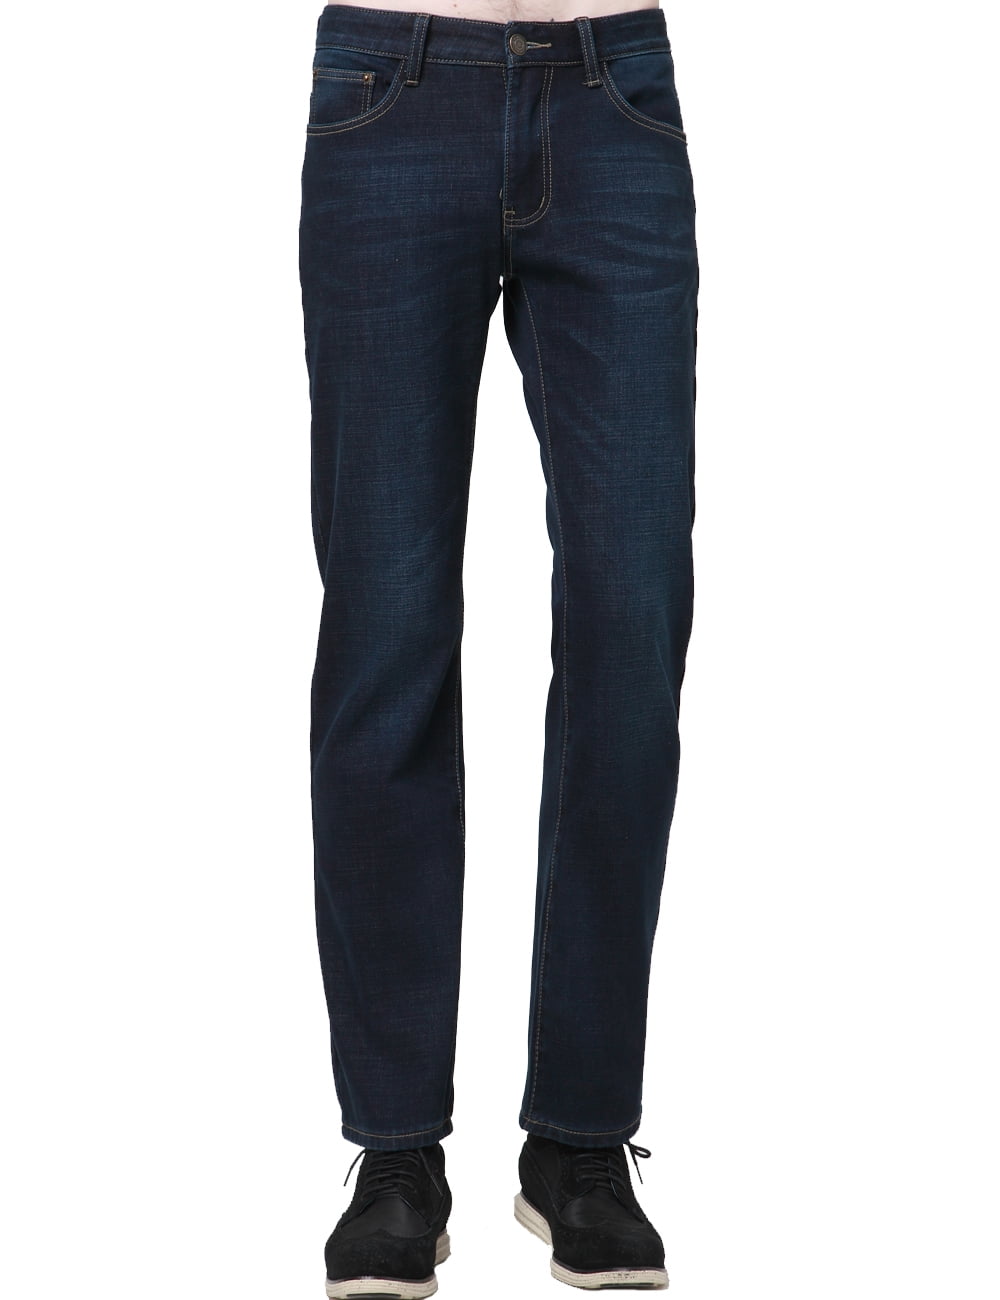 SSLR Men's Regular Fit Straight Leg Thermal Fleece Lined Jeans Pants ...